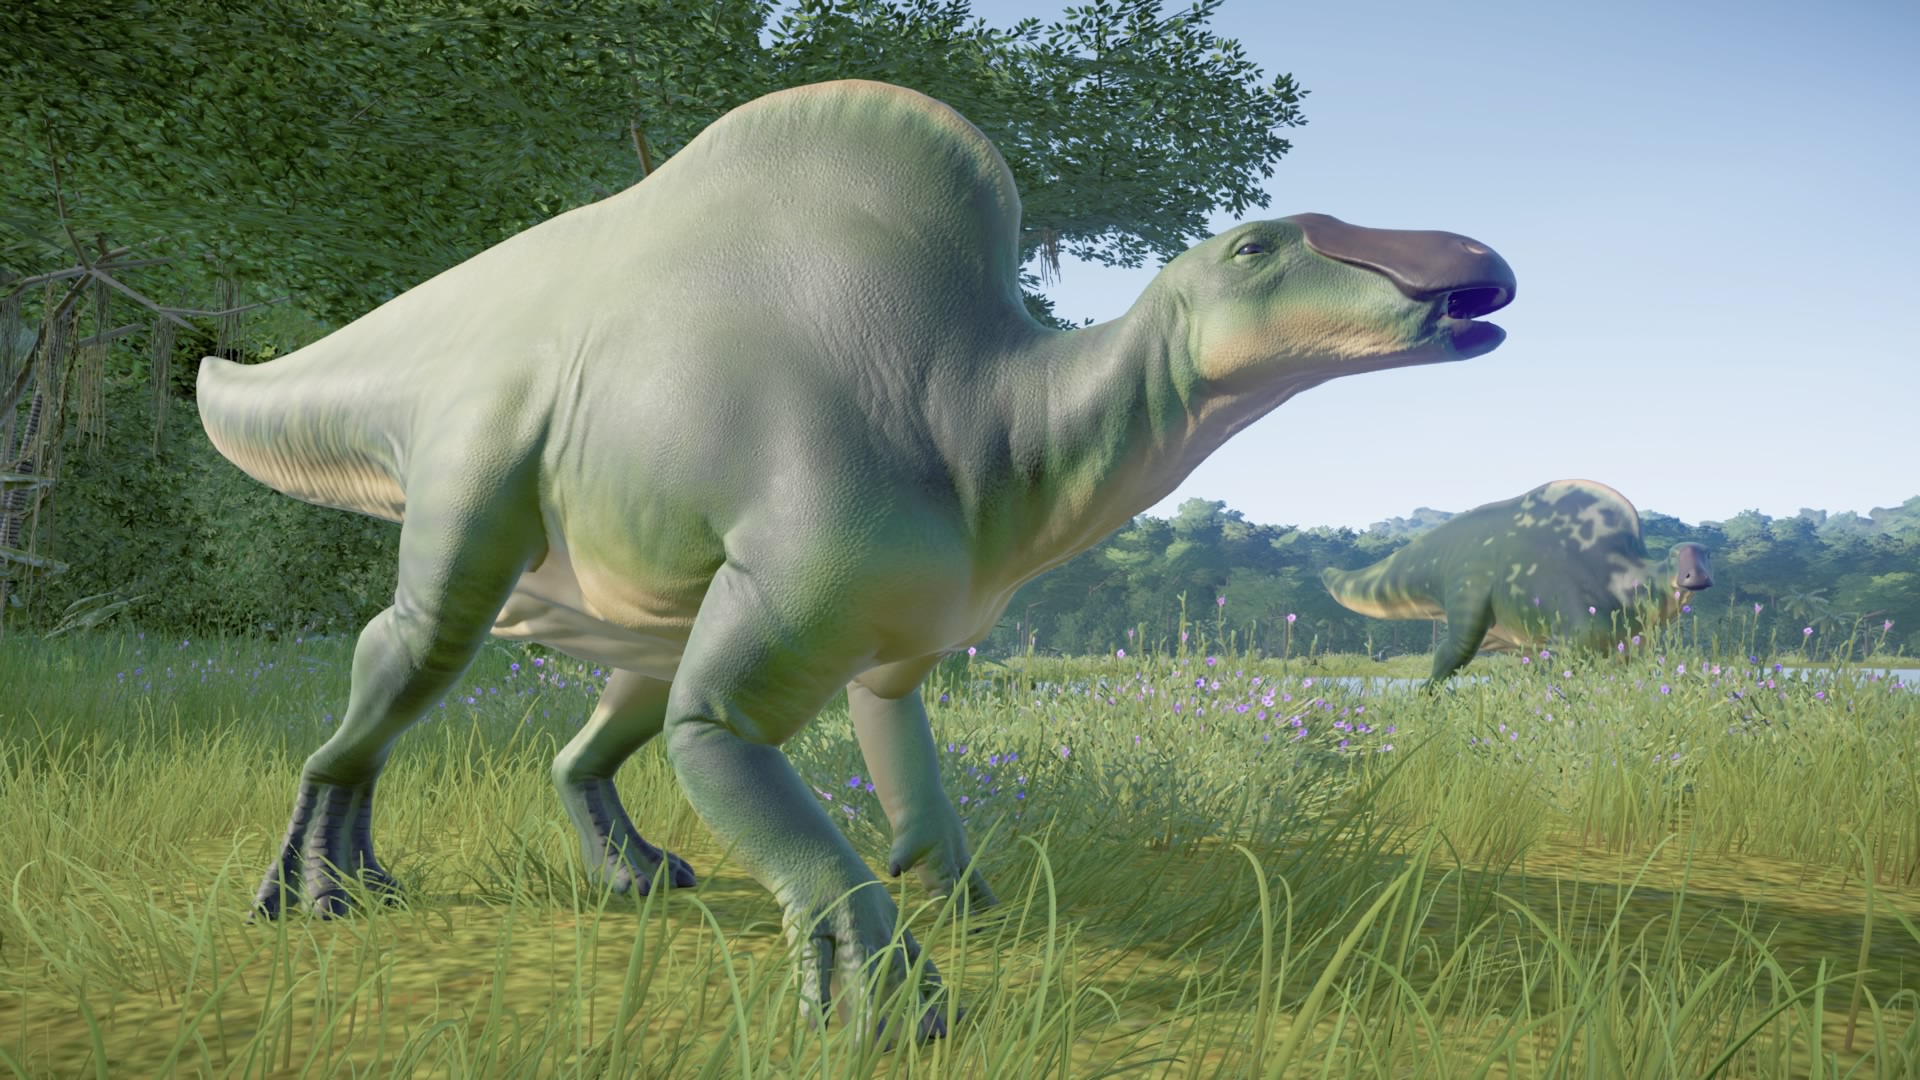 jurassic park builder ouranosaurus